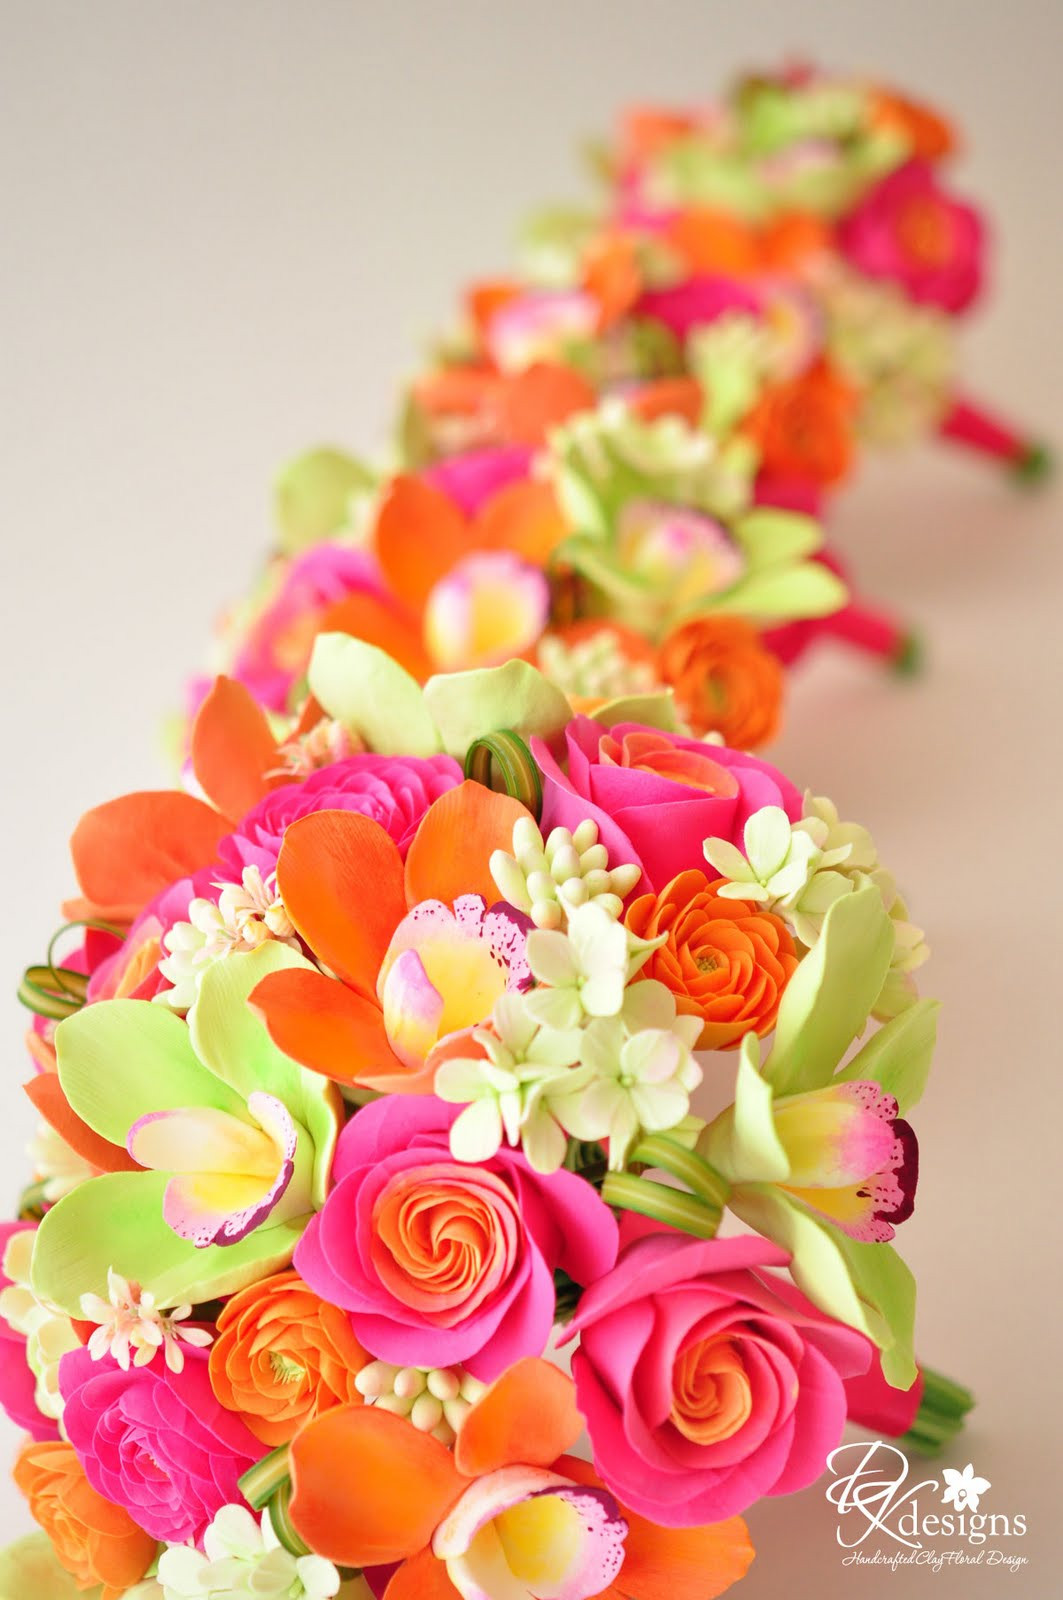 Orange Wedding Flowers
 DK Designs Pink Orange and Green Flowers for a